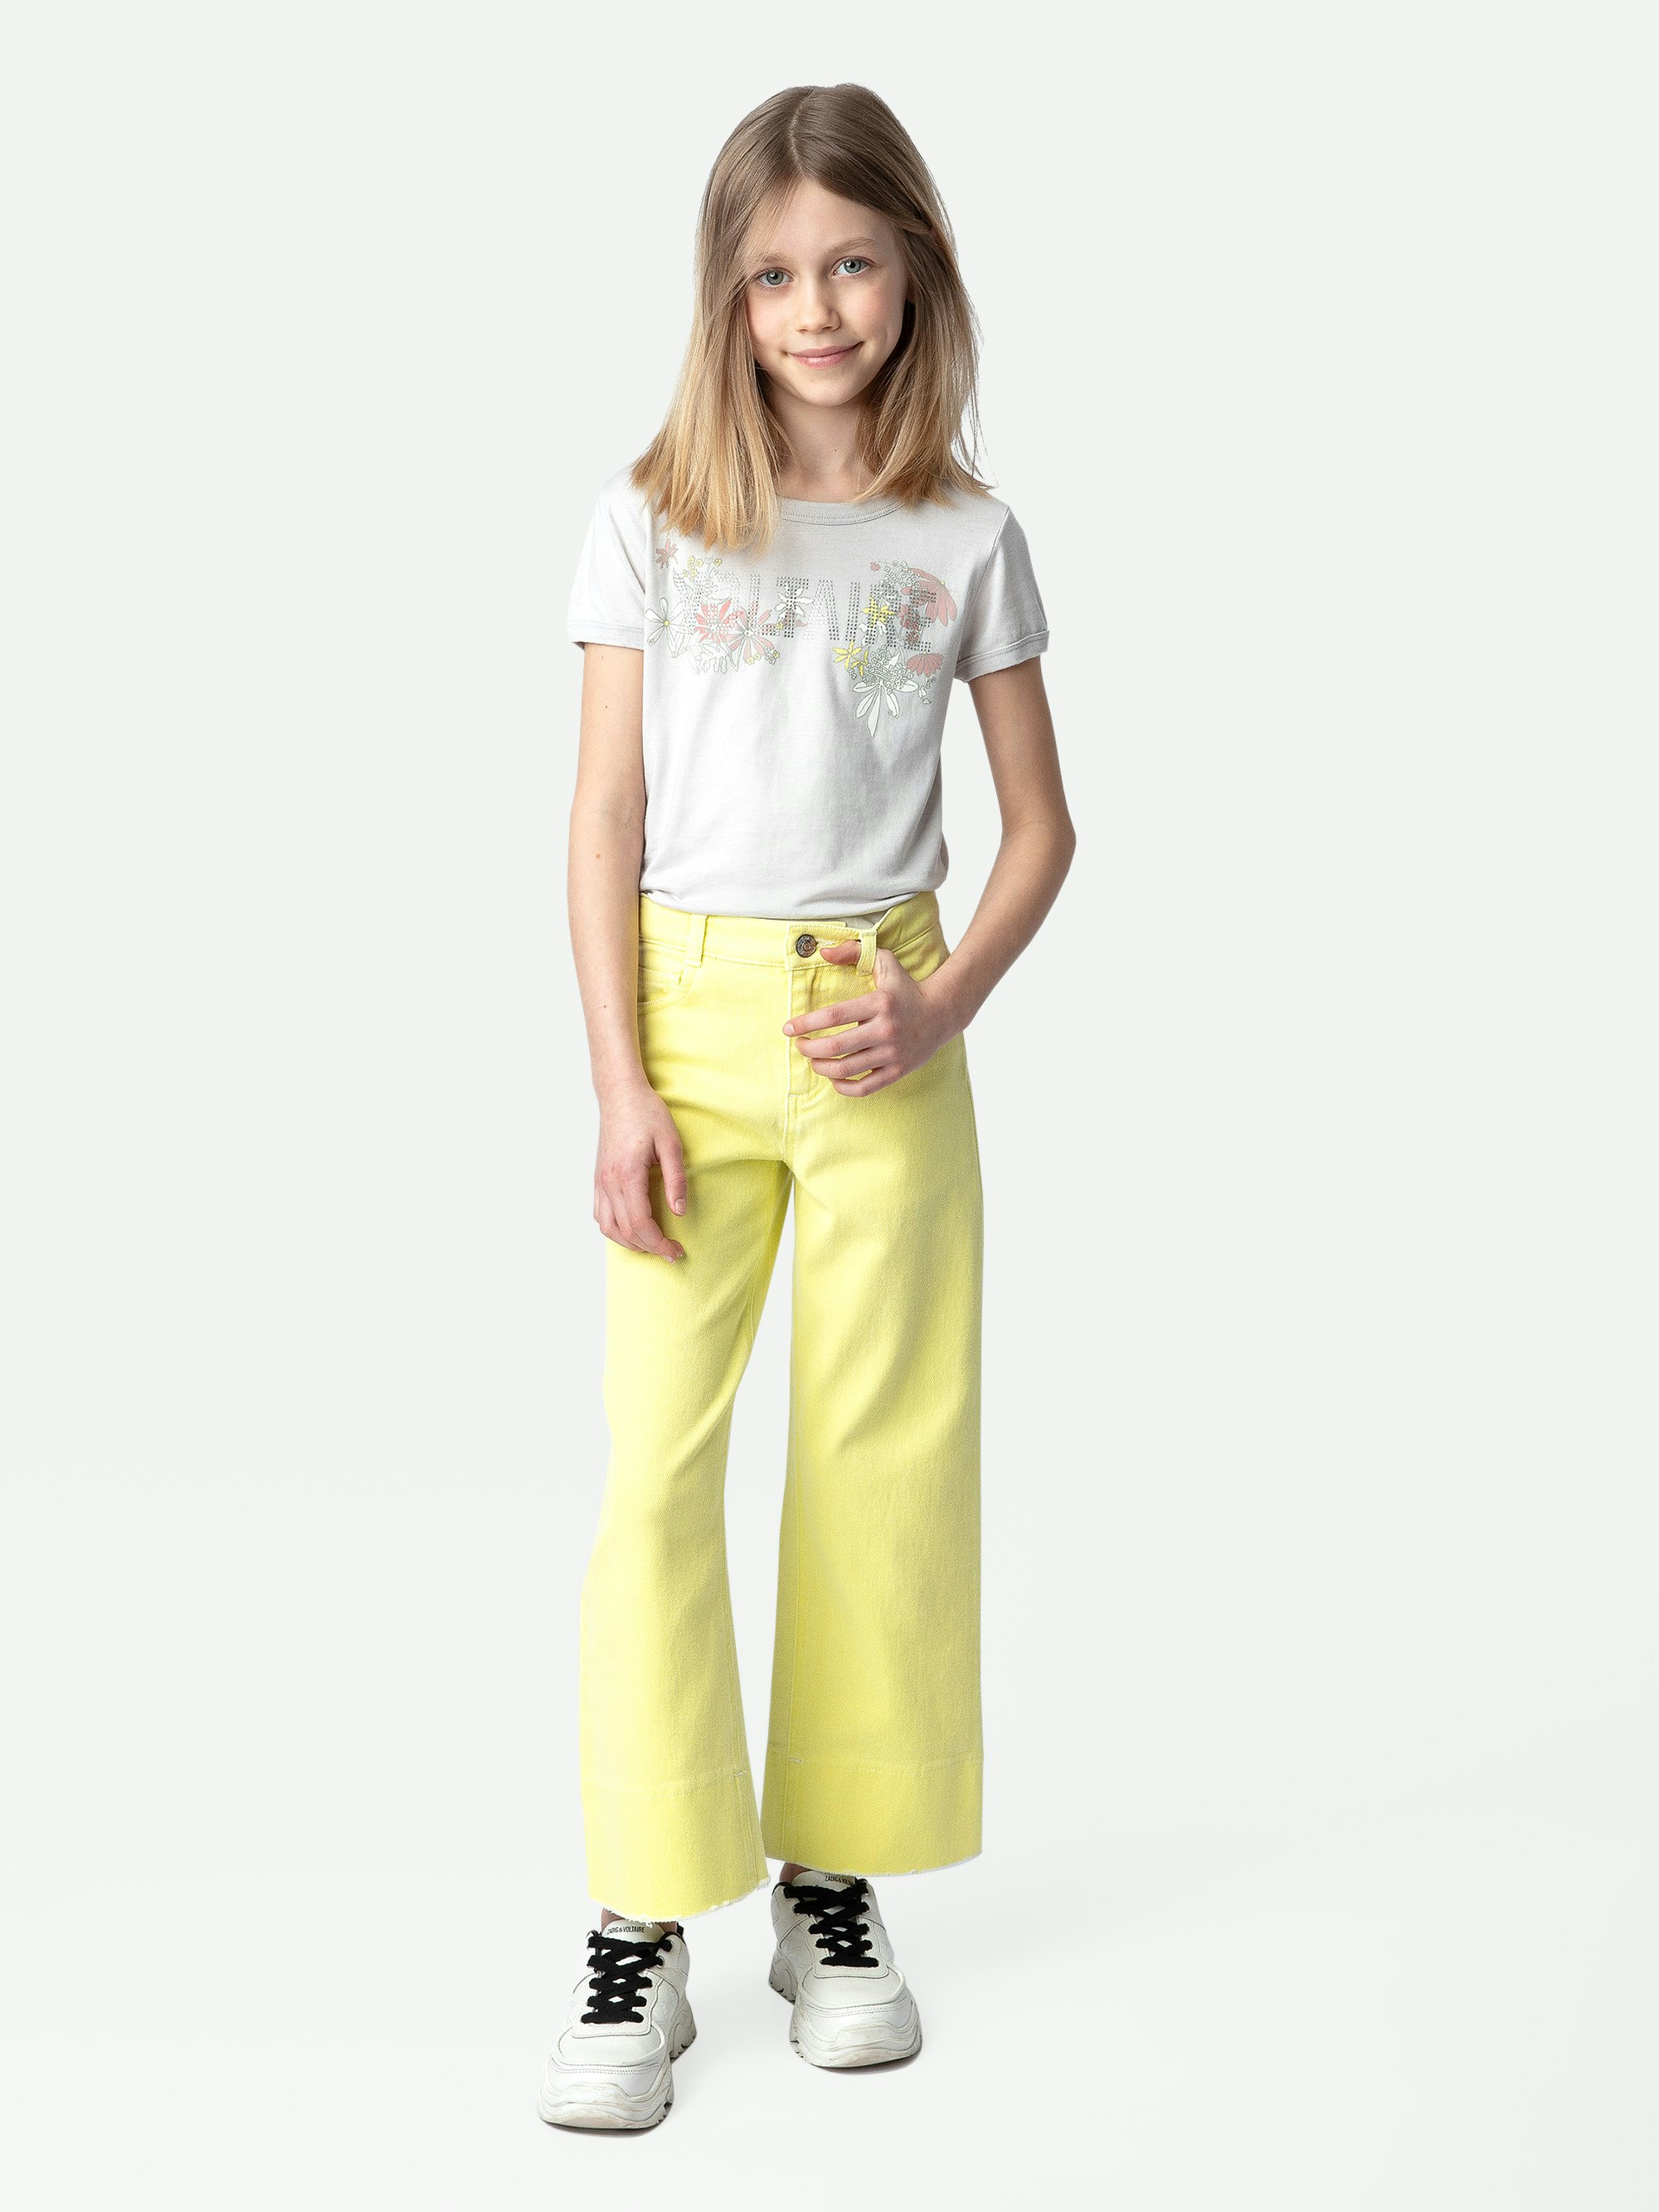 Alister Girls’ T-shirt - Girls’ grey jersey short-sleeved T-shirt with illustration.